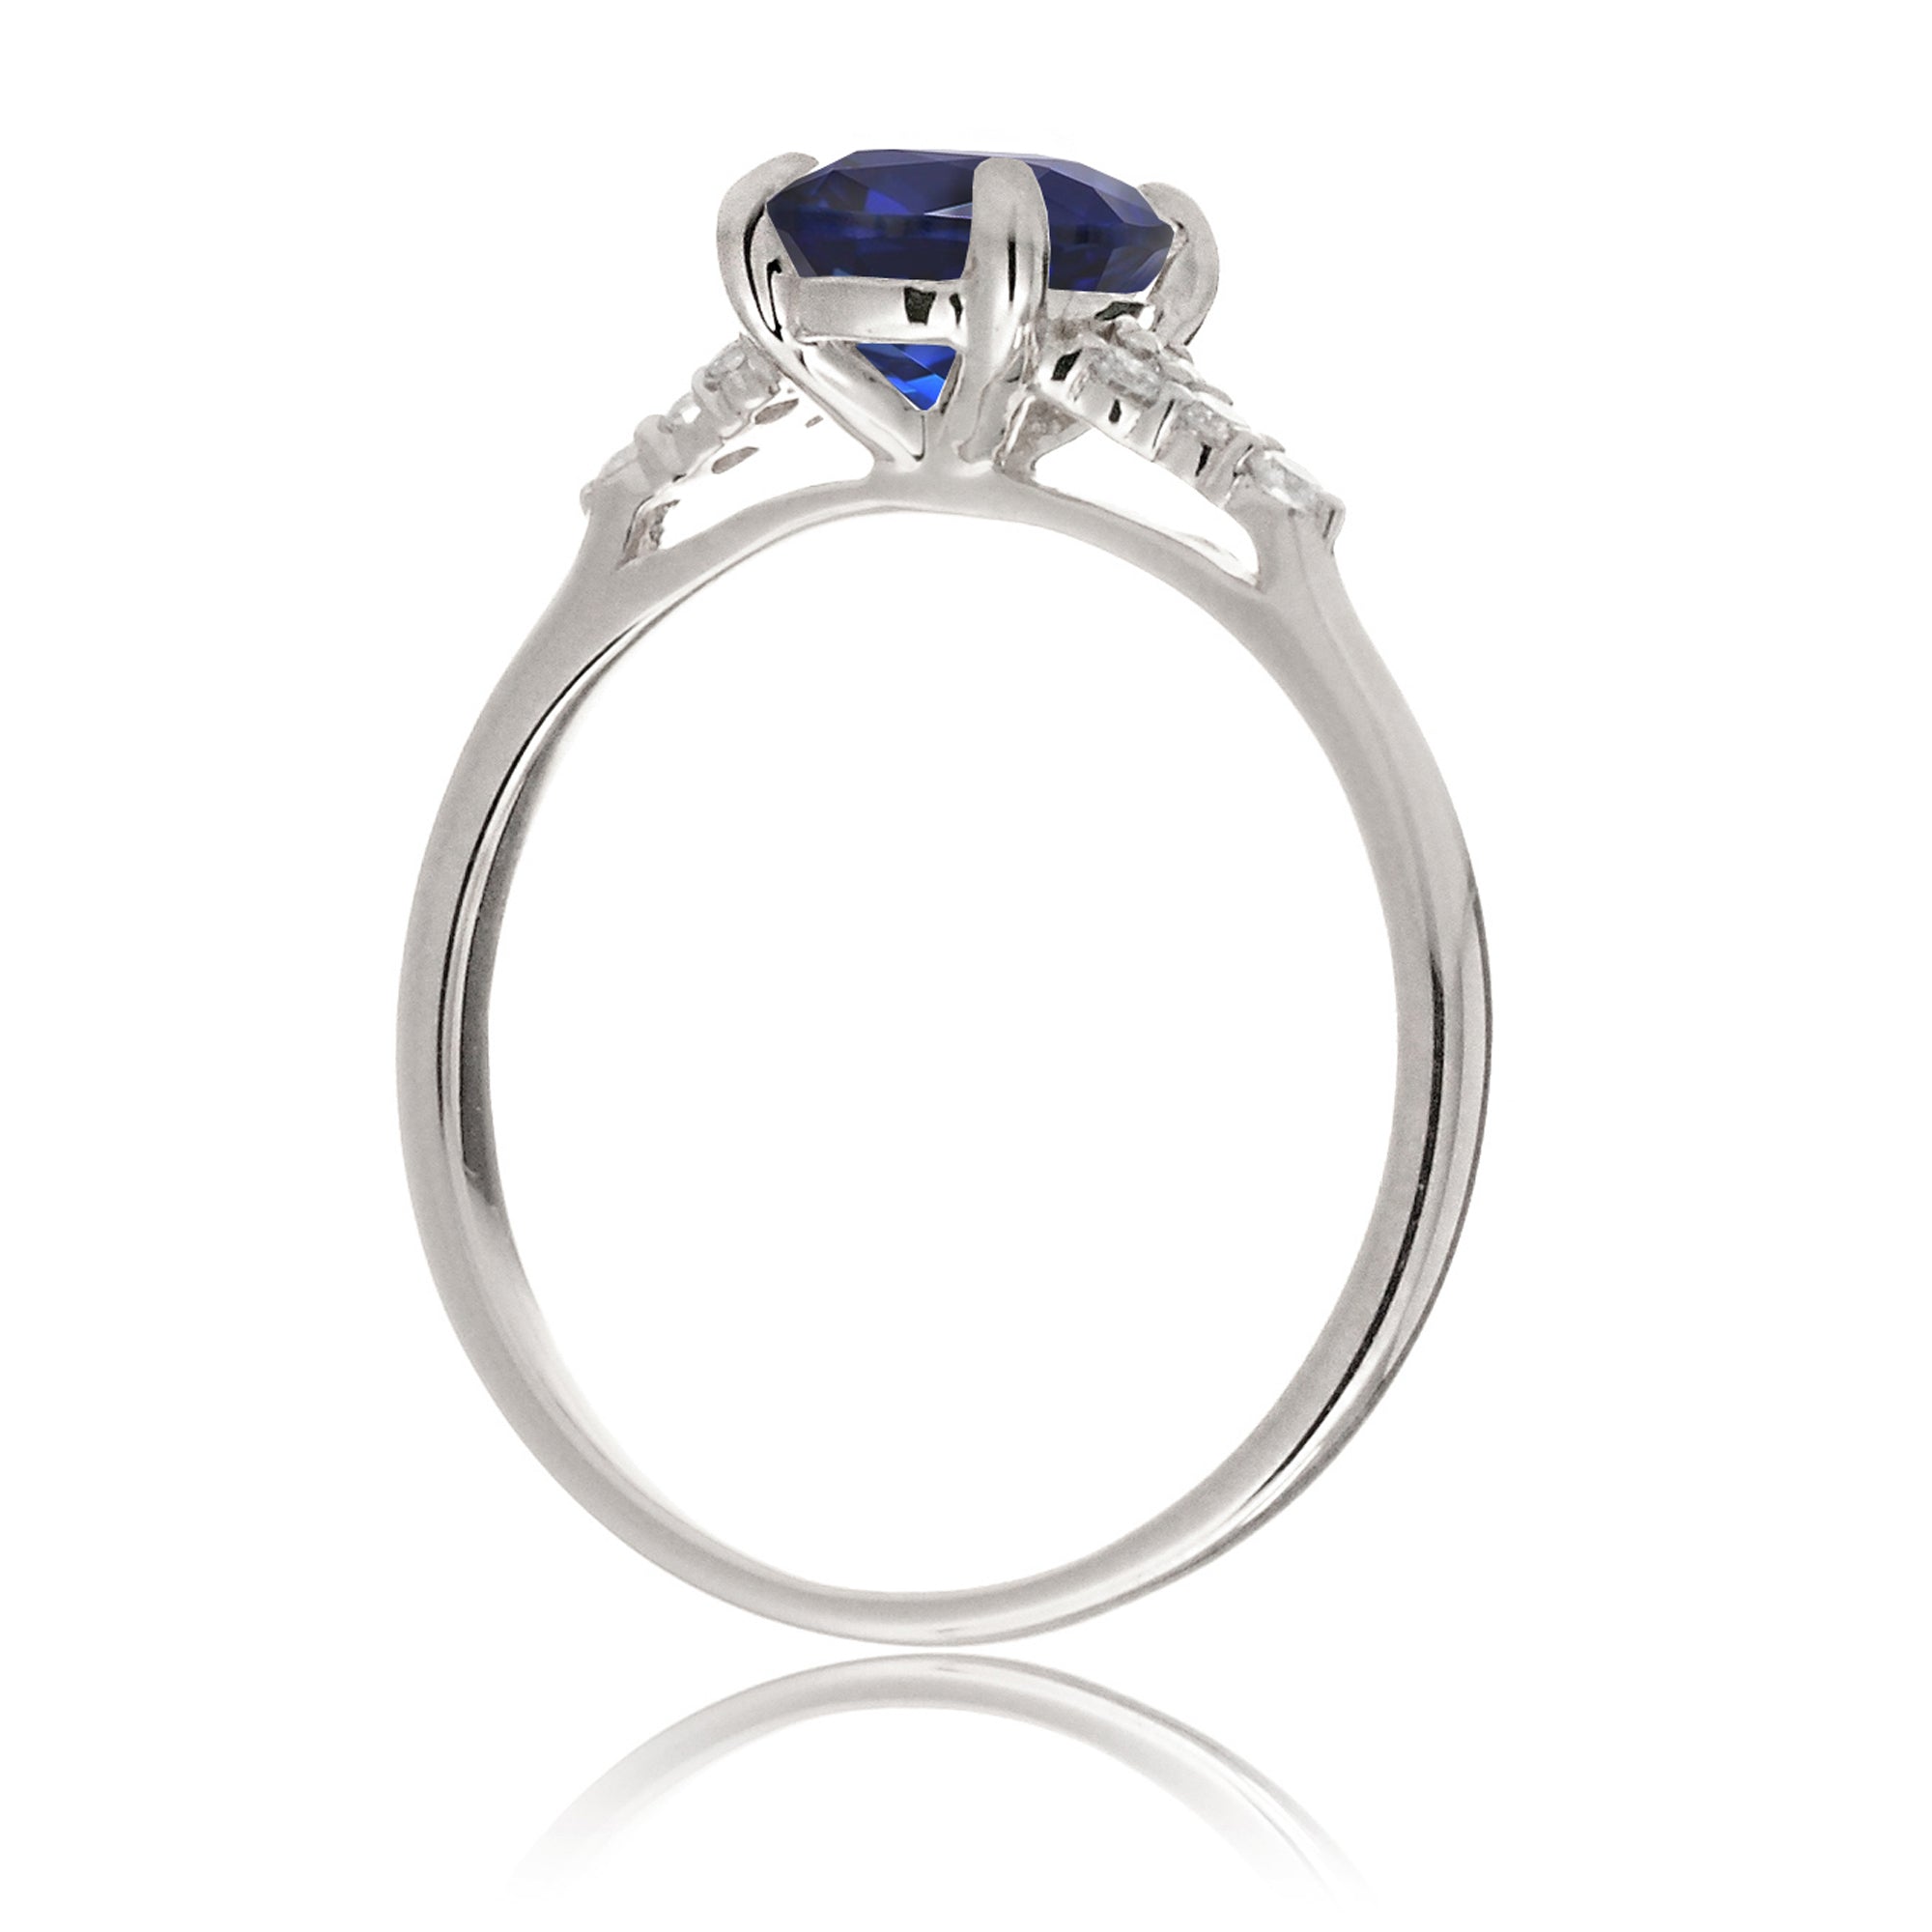 Pear shape blue sapphire diamond ring in white gold - the Chloe lab-grown